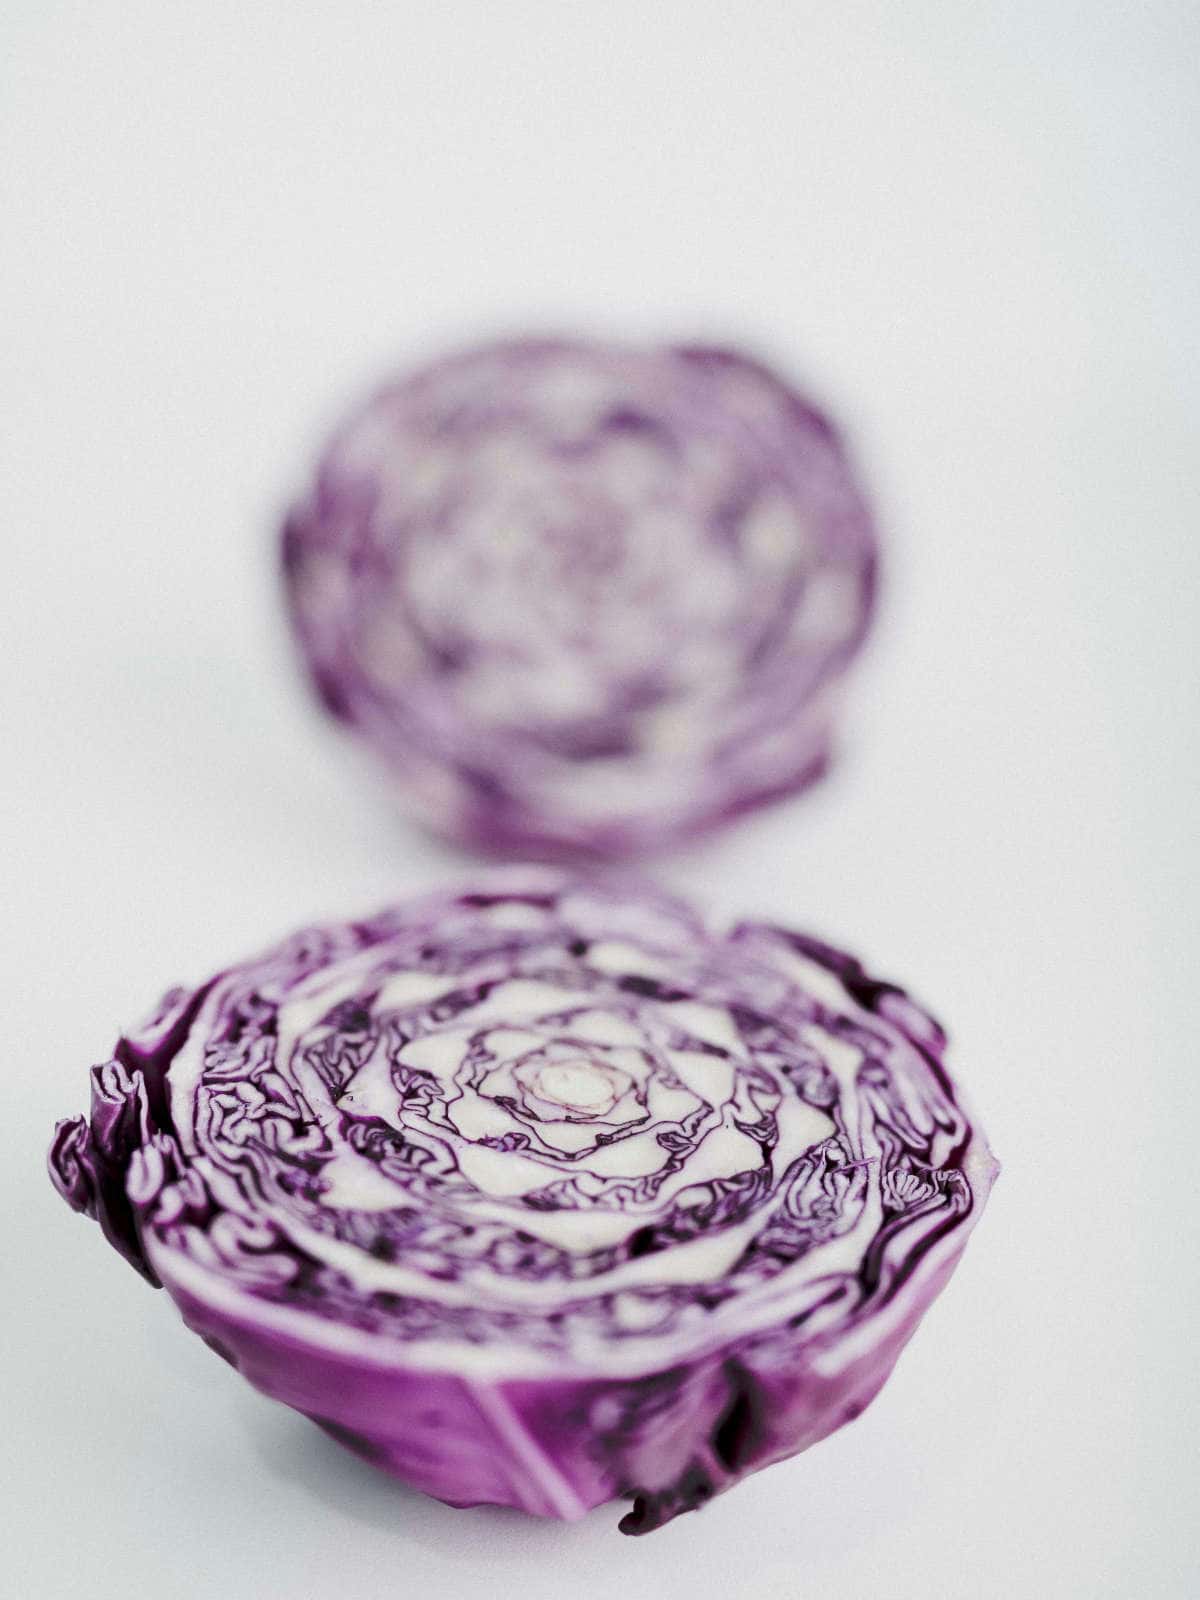 A purple cabbage cut in half.